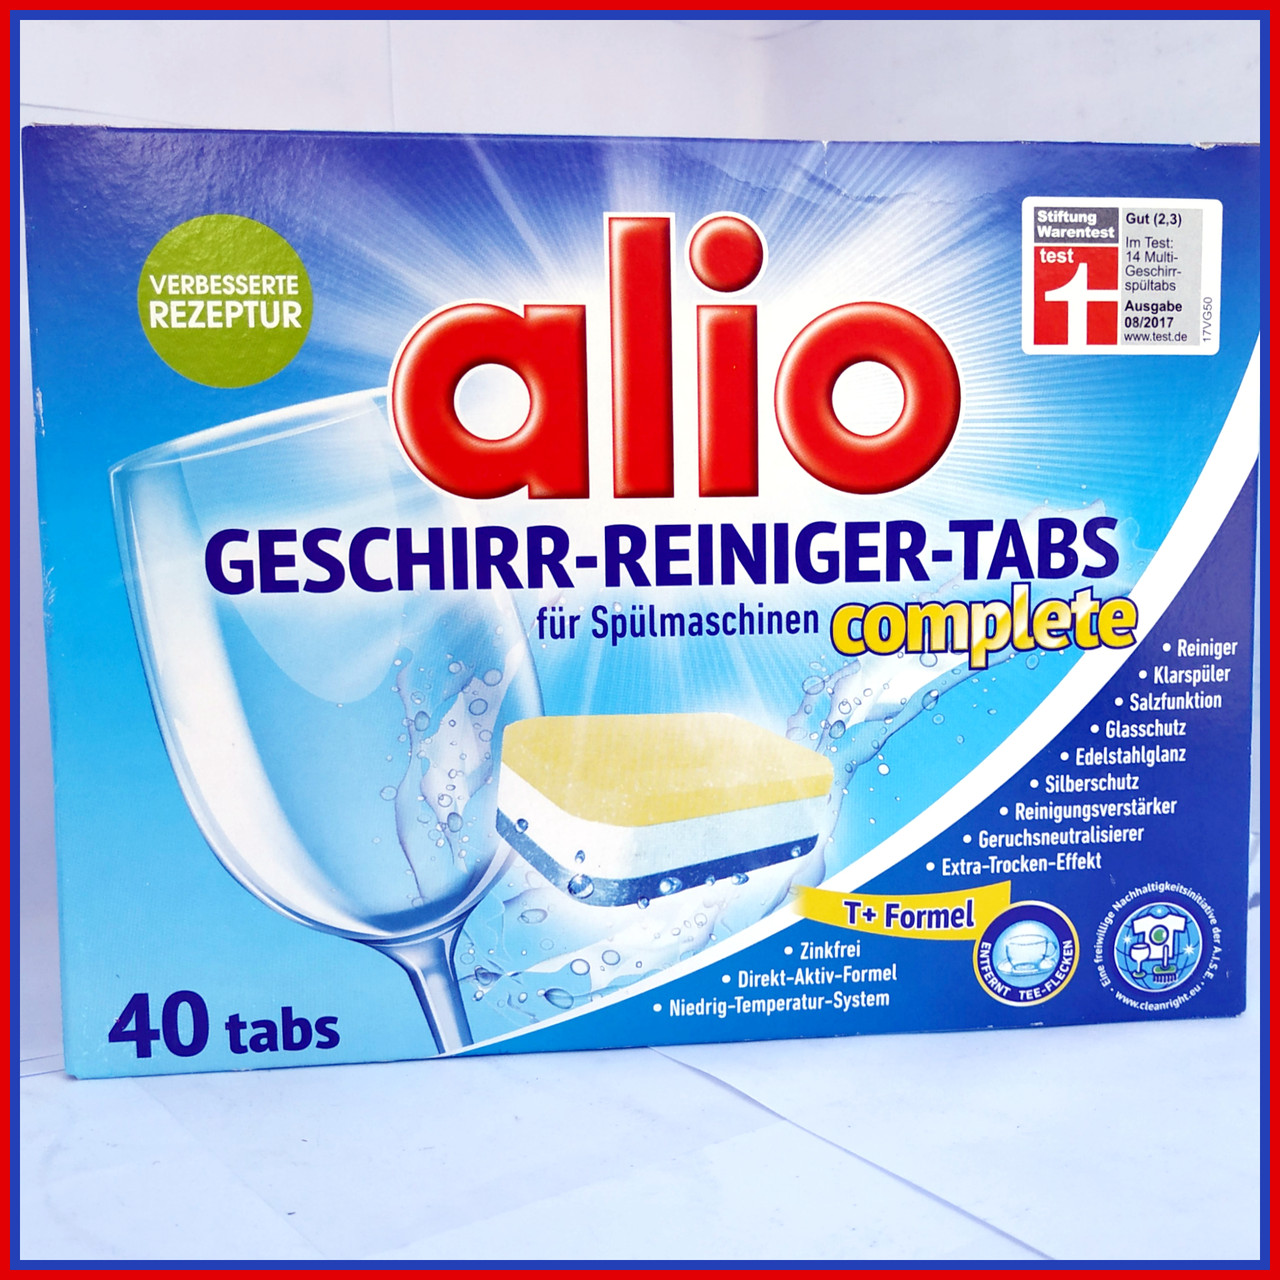 Таблетки для миття посуду Alio Geschirr-reiniger-tabs complete 40 шт